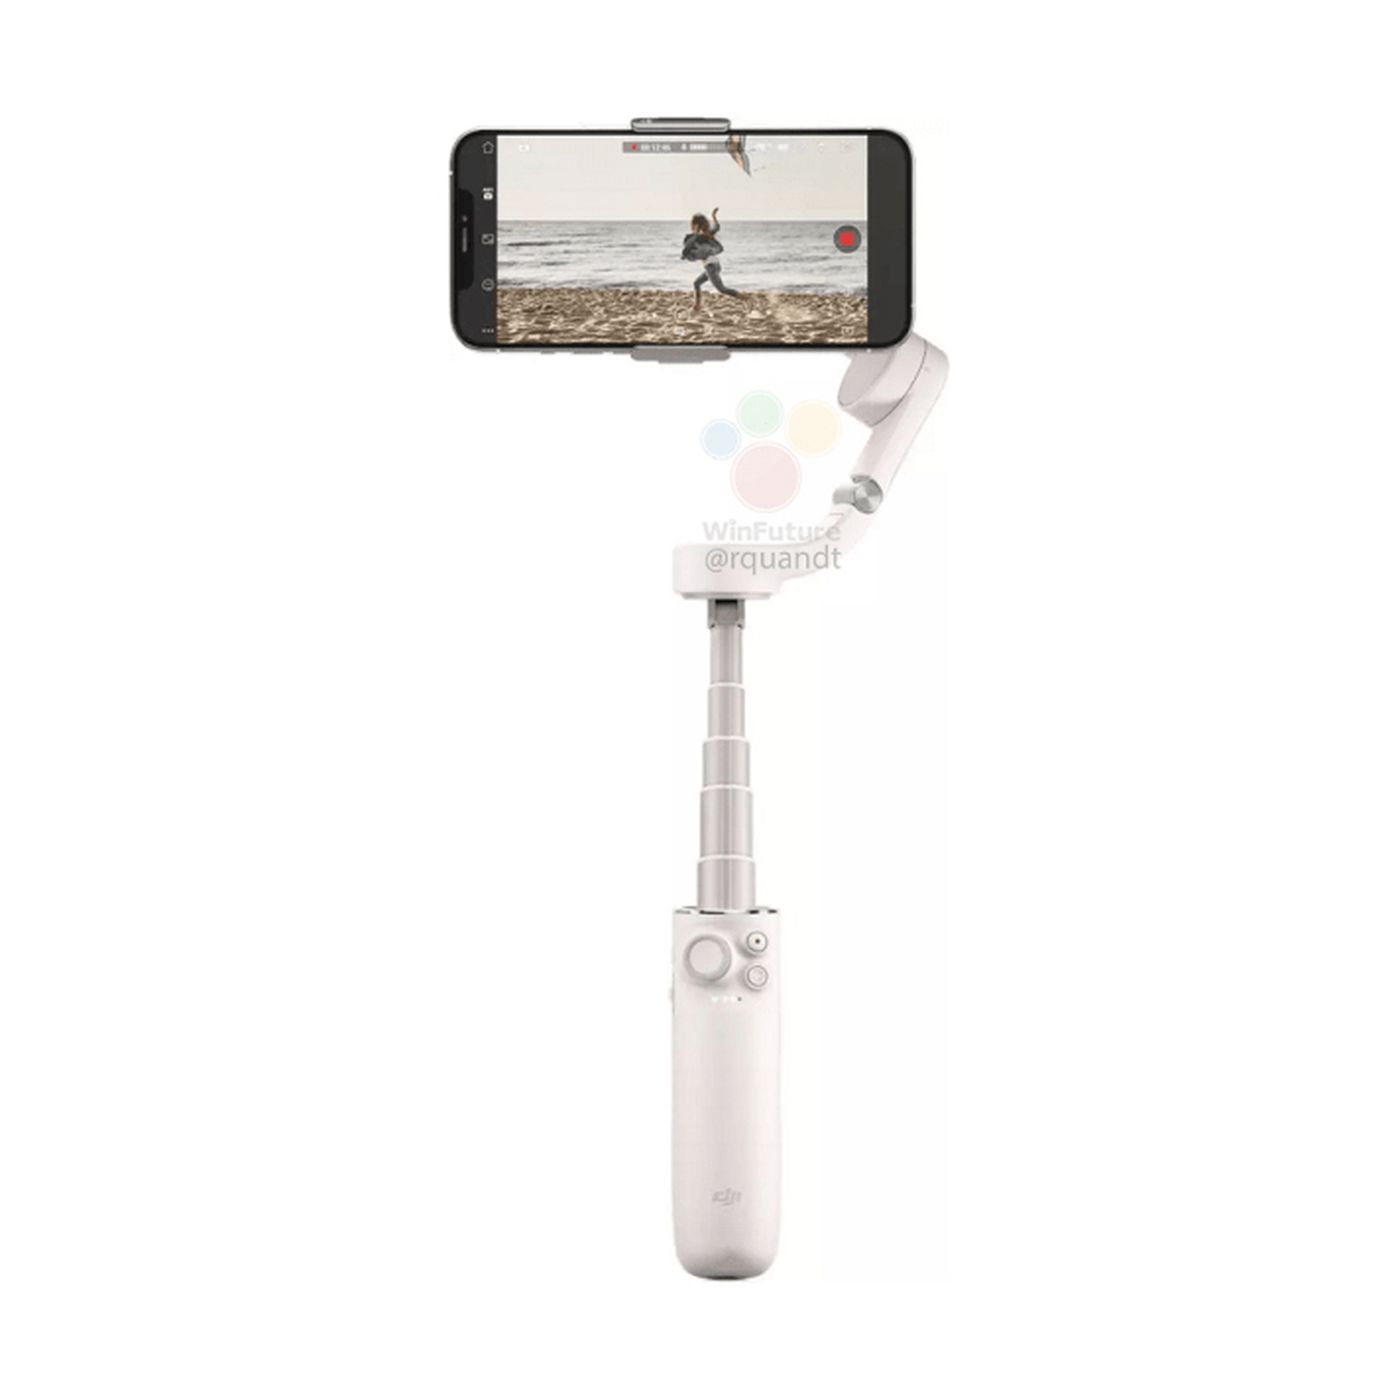 DJI's next smartphone gimbal might include a telescoping selfie 